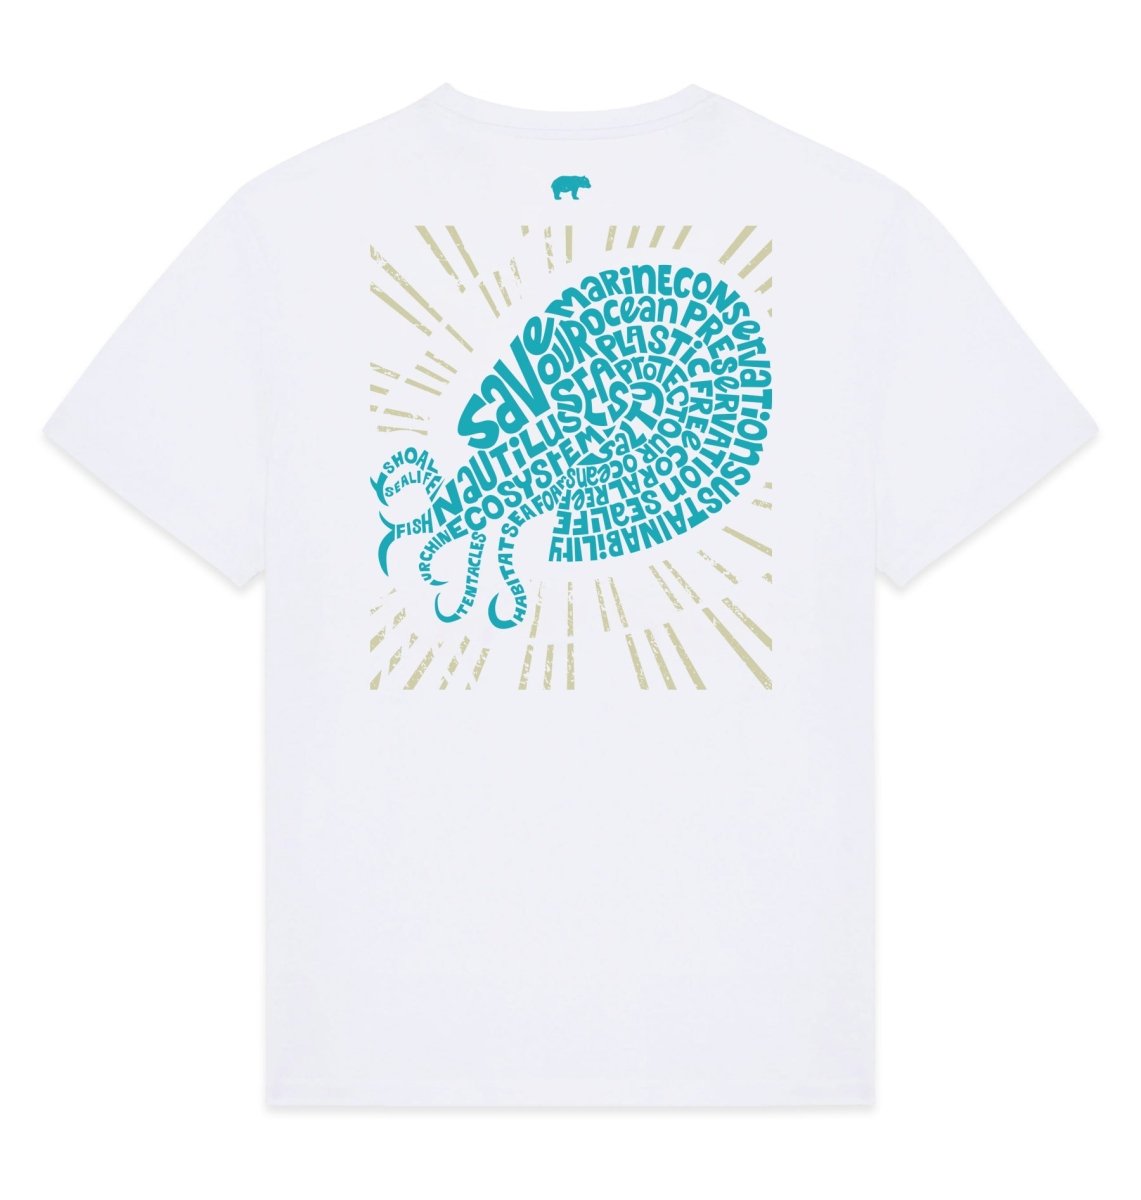 Nautilus Mens T-shirt - Blue Panda